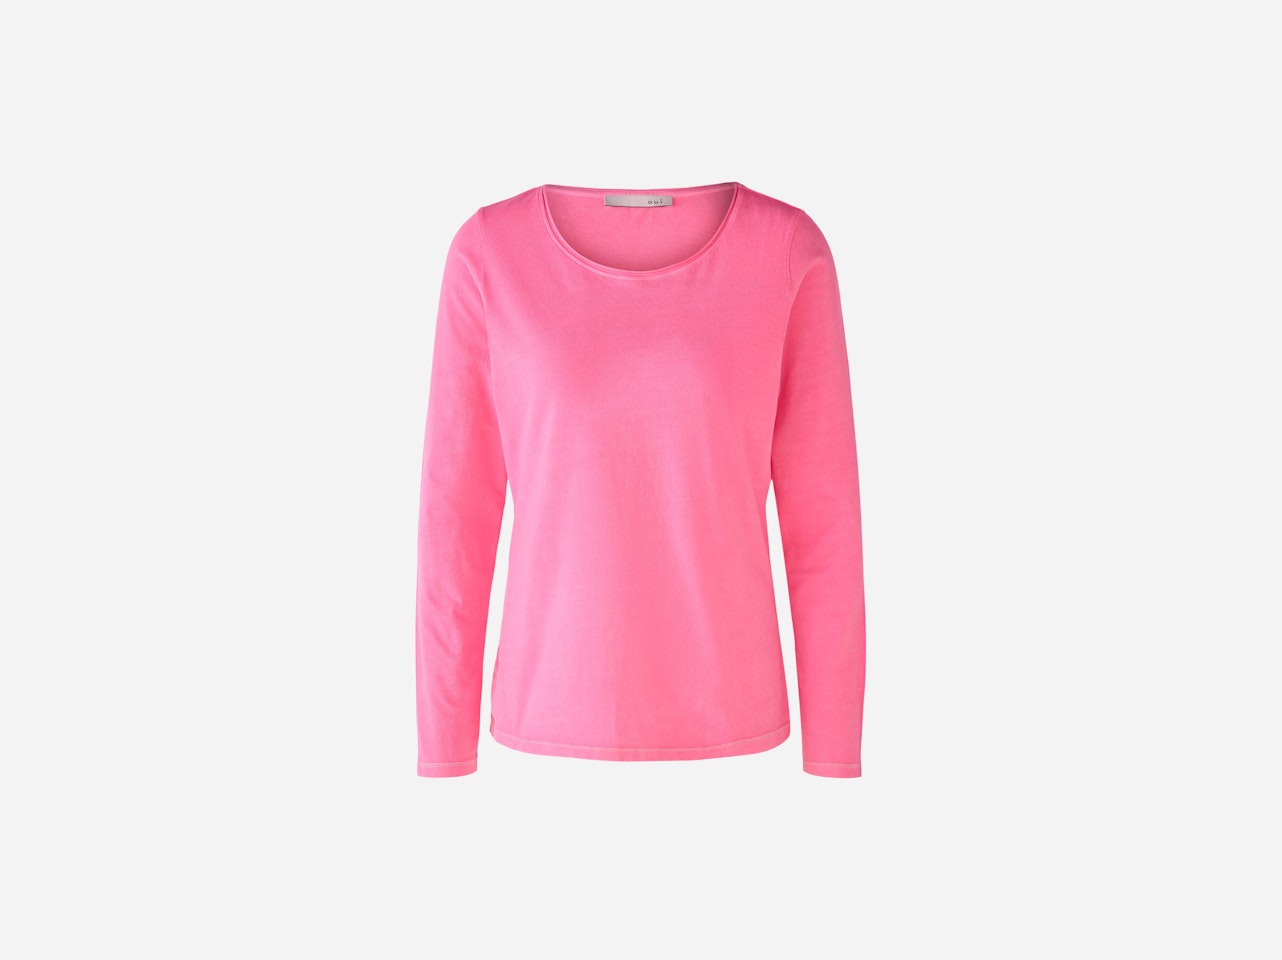 Bild 5 von Long-sleeved shirt made from organic cotton in azalea pink | Oui